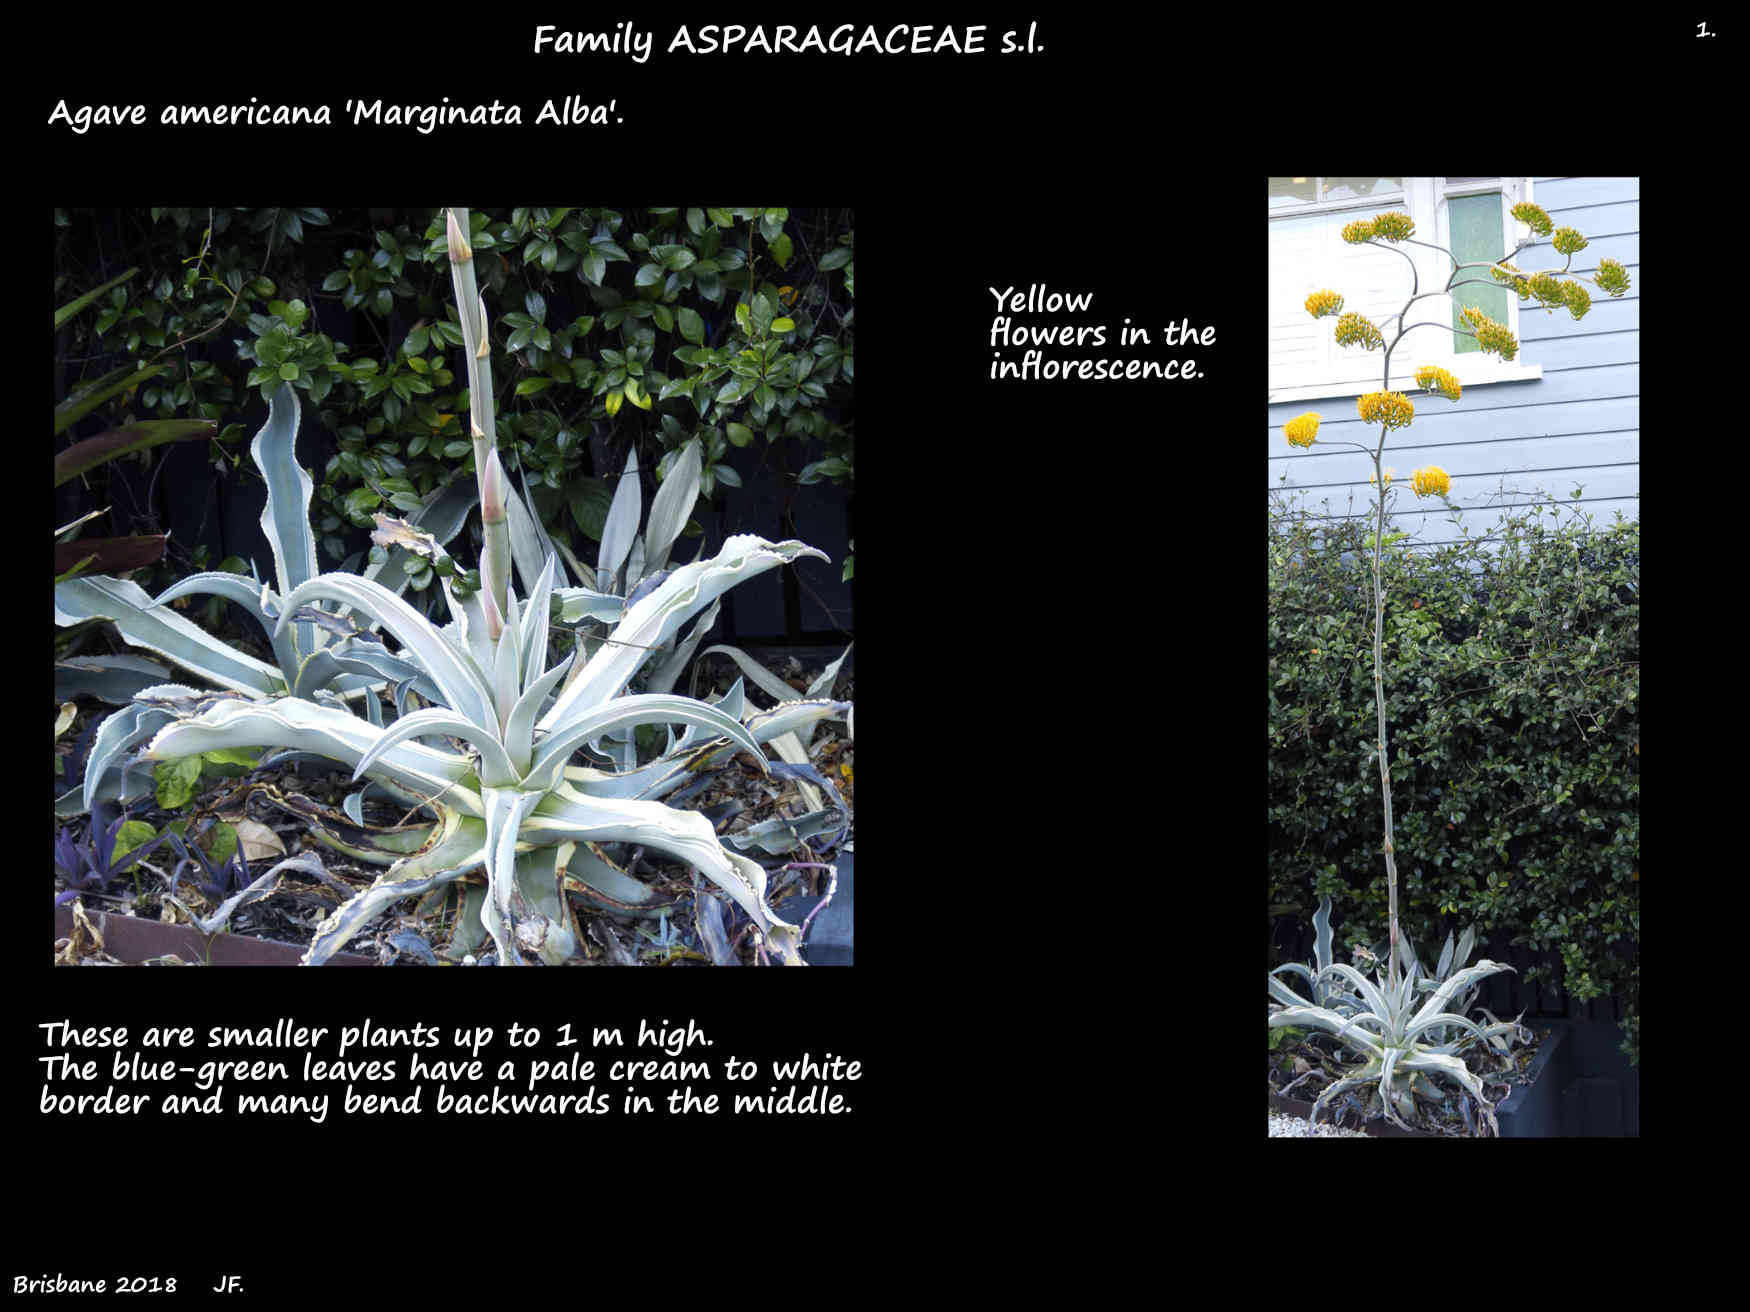 1 A clump of Agave americana 'Marginata Alba' plants & an inflorescence